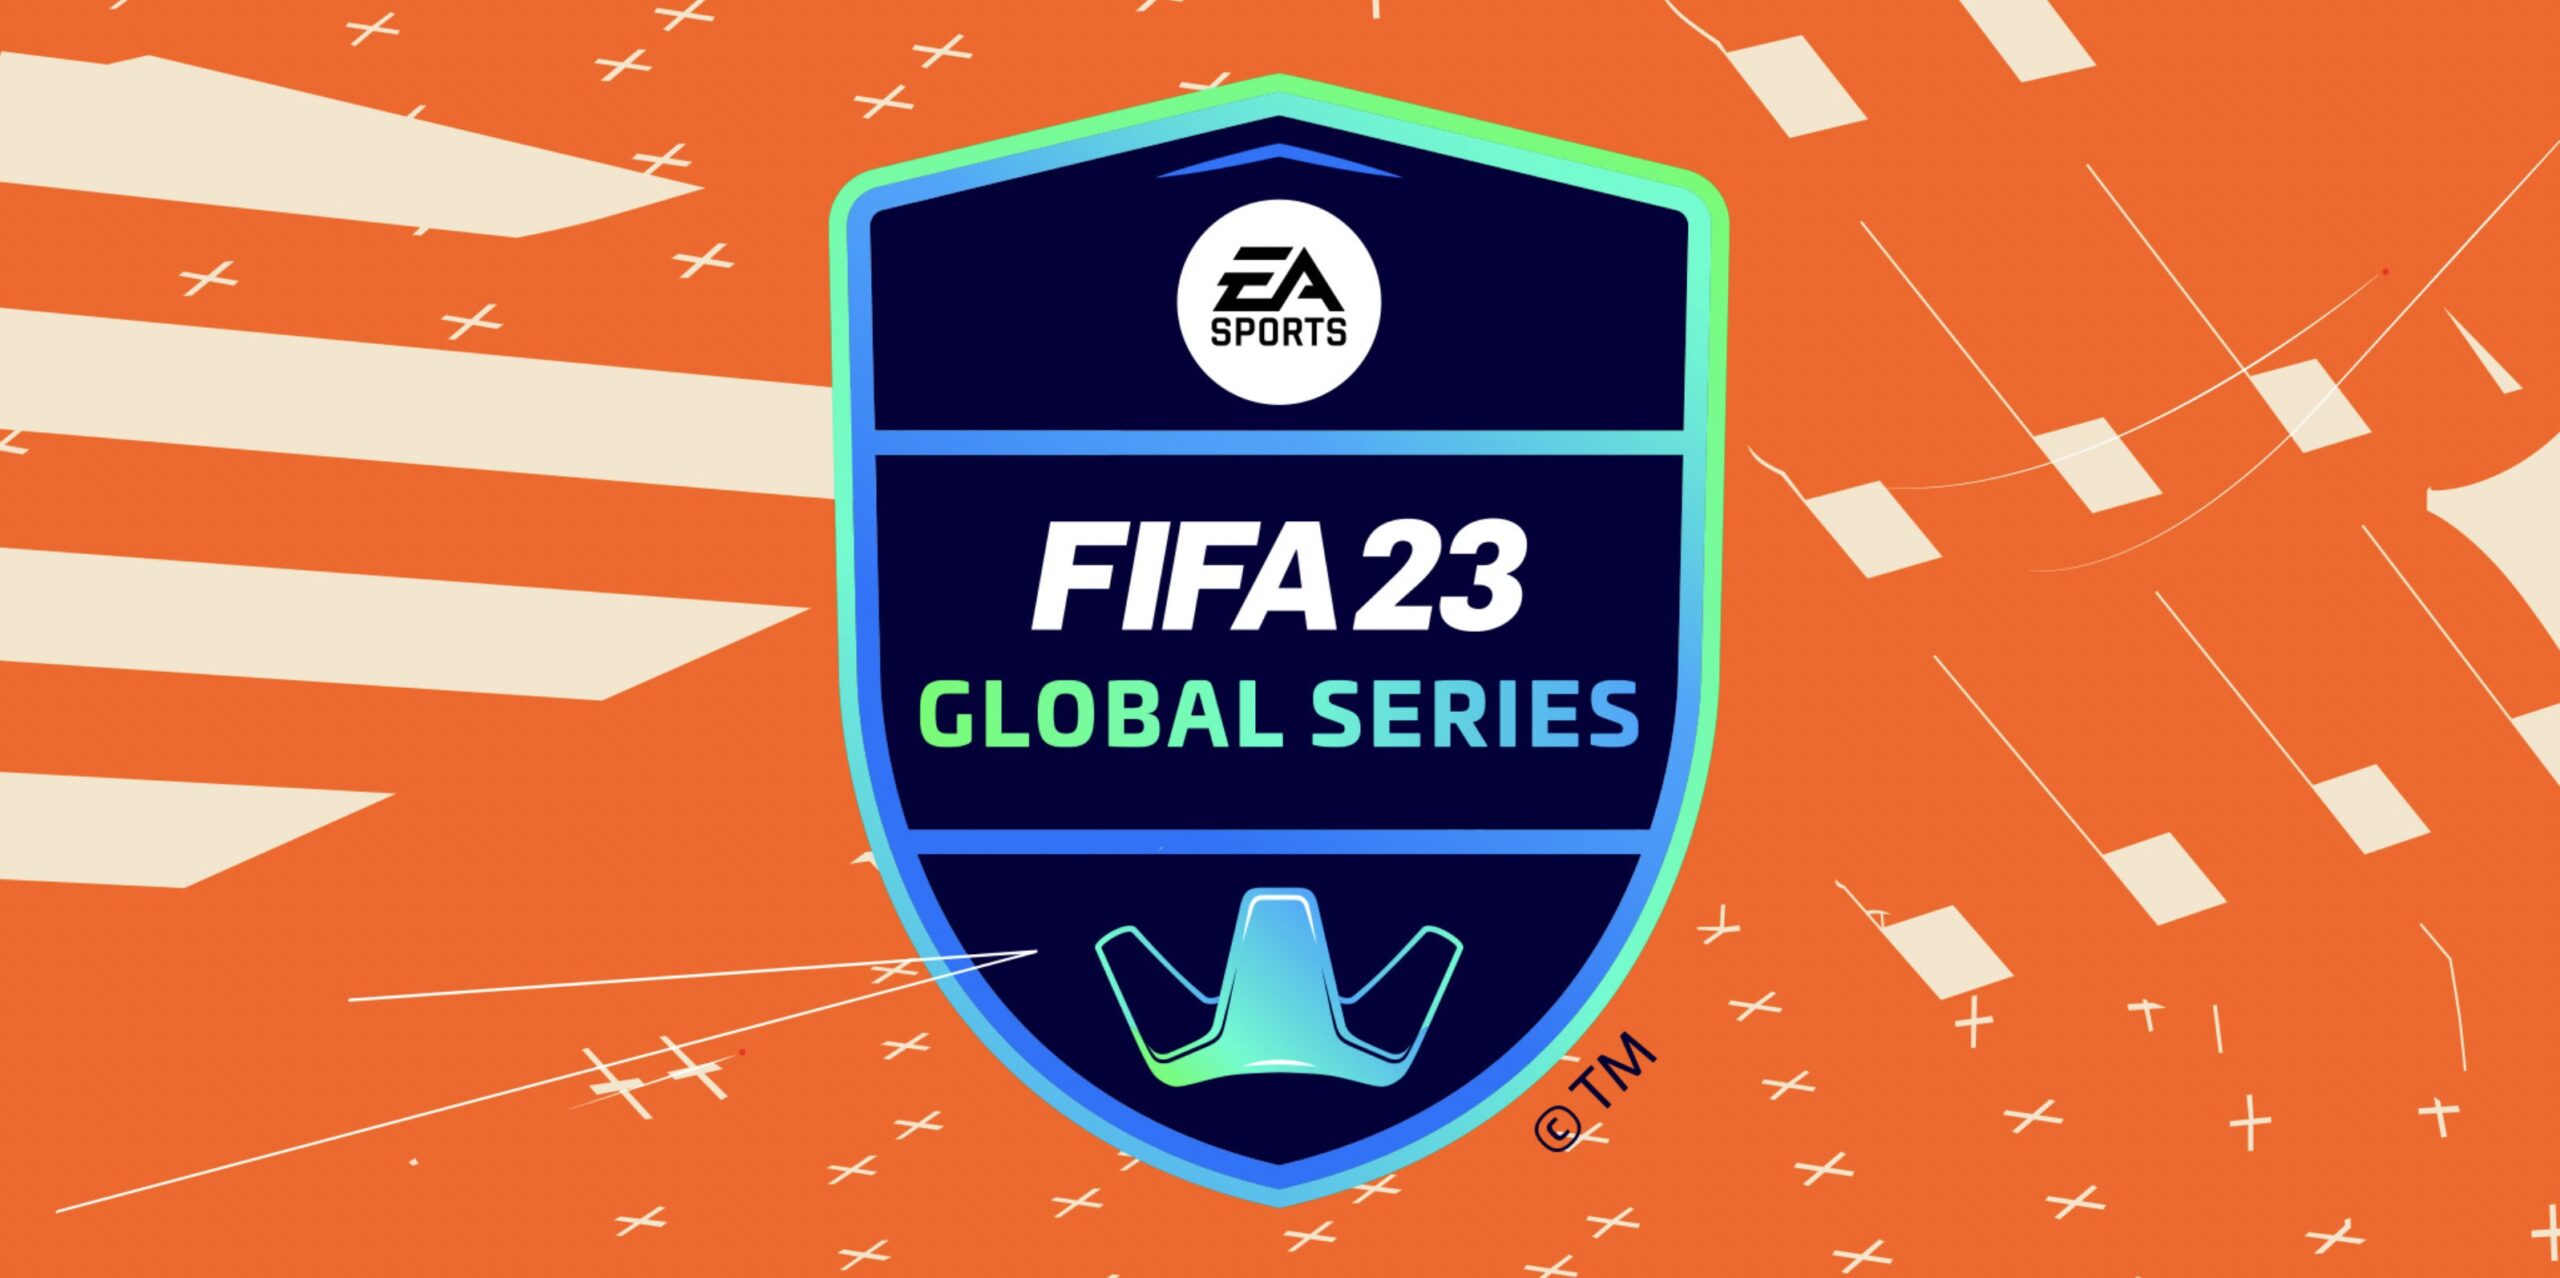 EA SPORTS FIFA 23 tendrá la FIFAe Club World Cup 2023